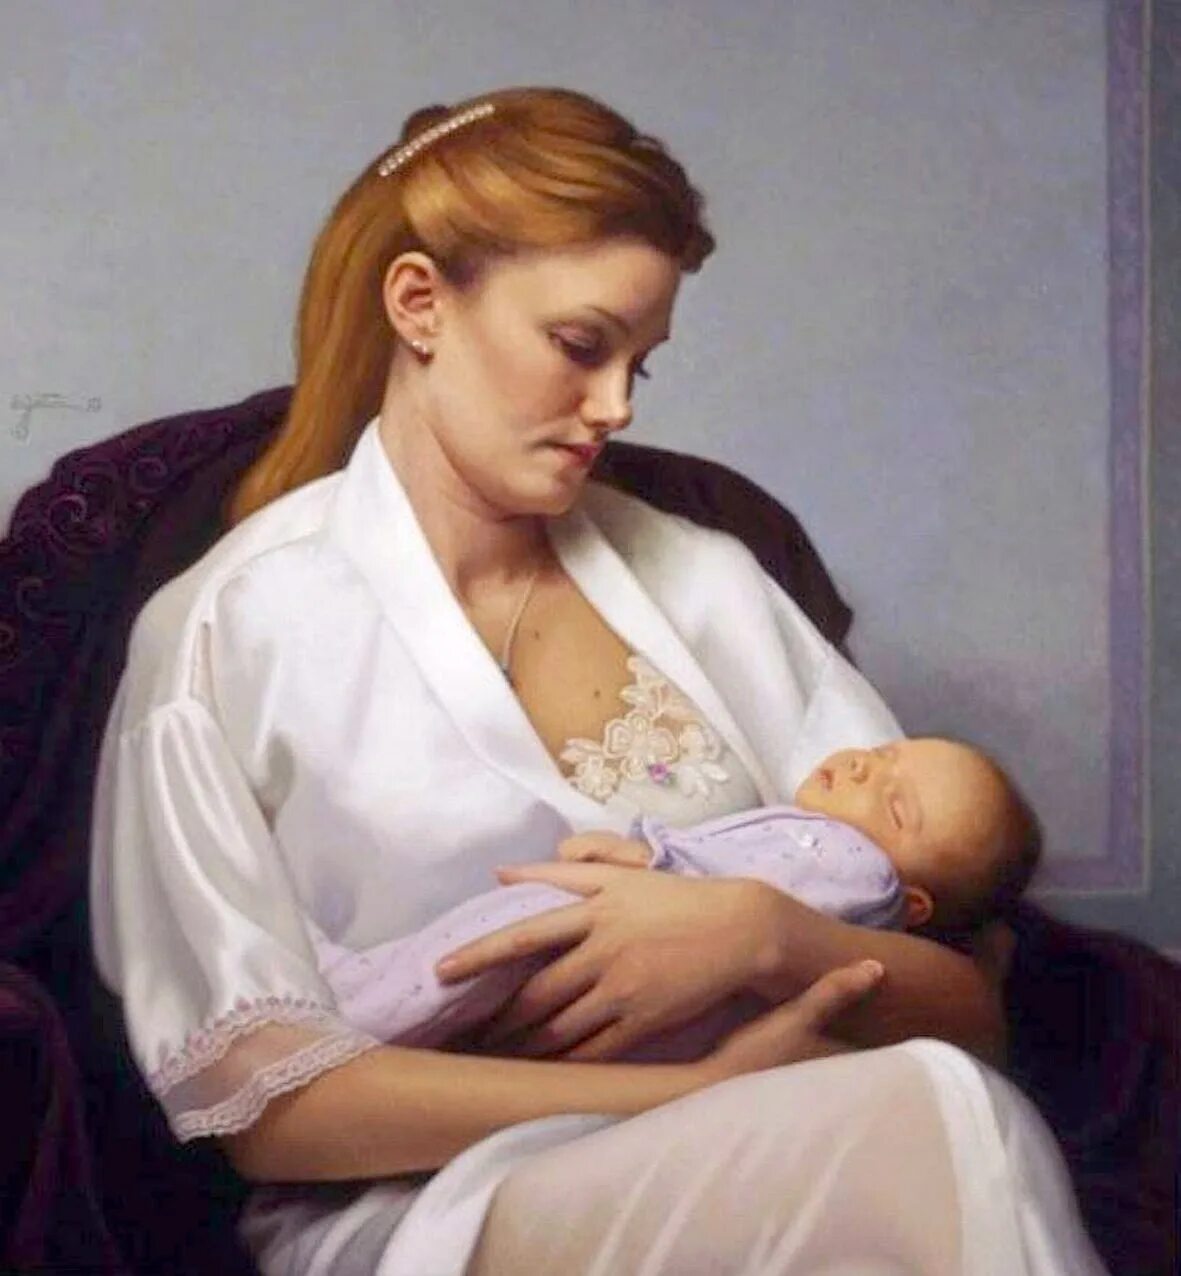 Женщина с младенцем. Женщина с младенцем на руках. Кормящая мама. Женщина с ребенком на руках. Мужчины кормят грудью ребенка